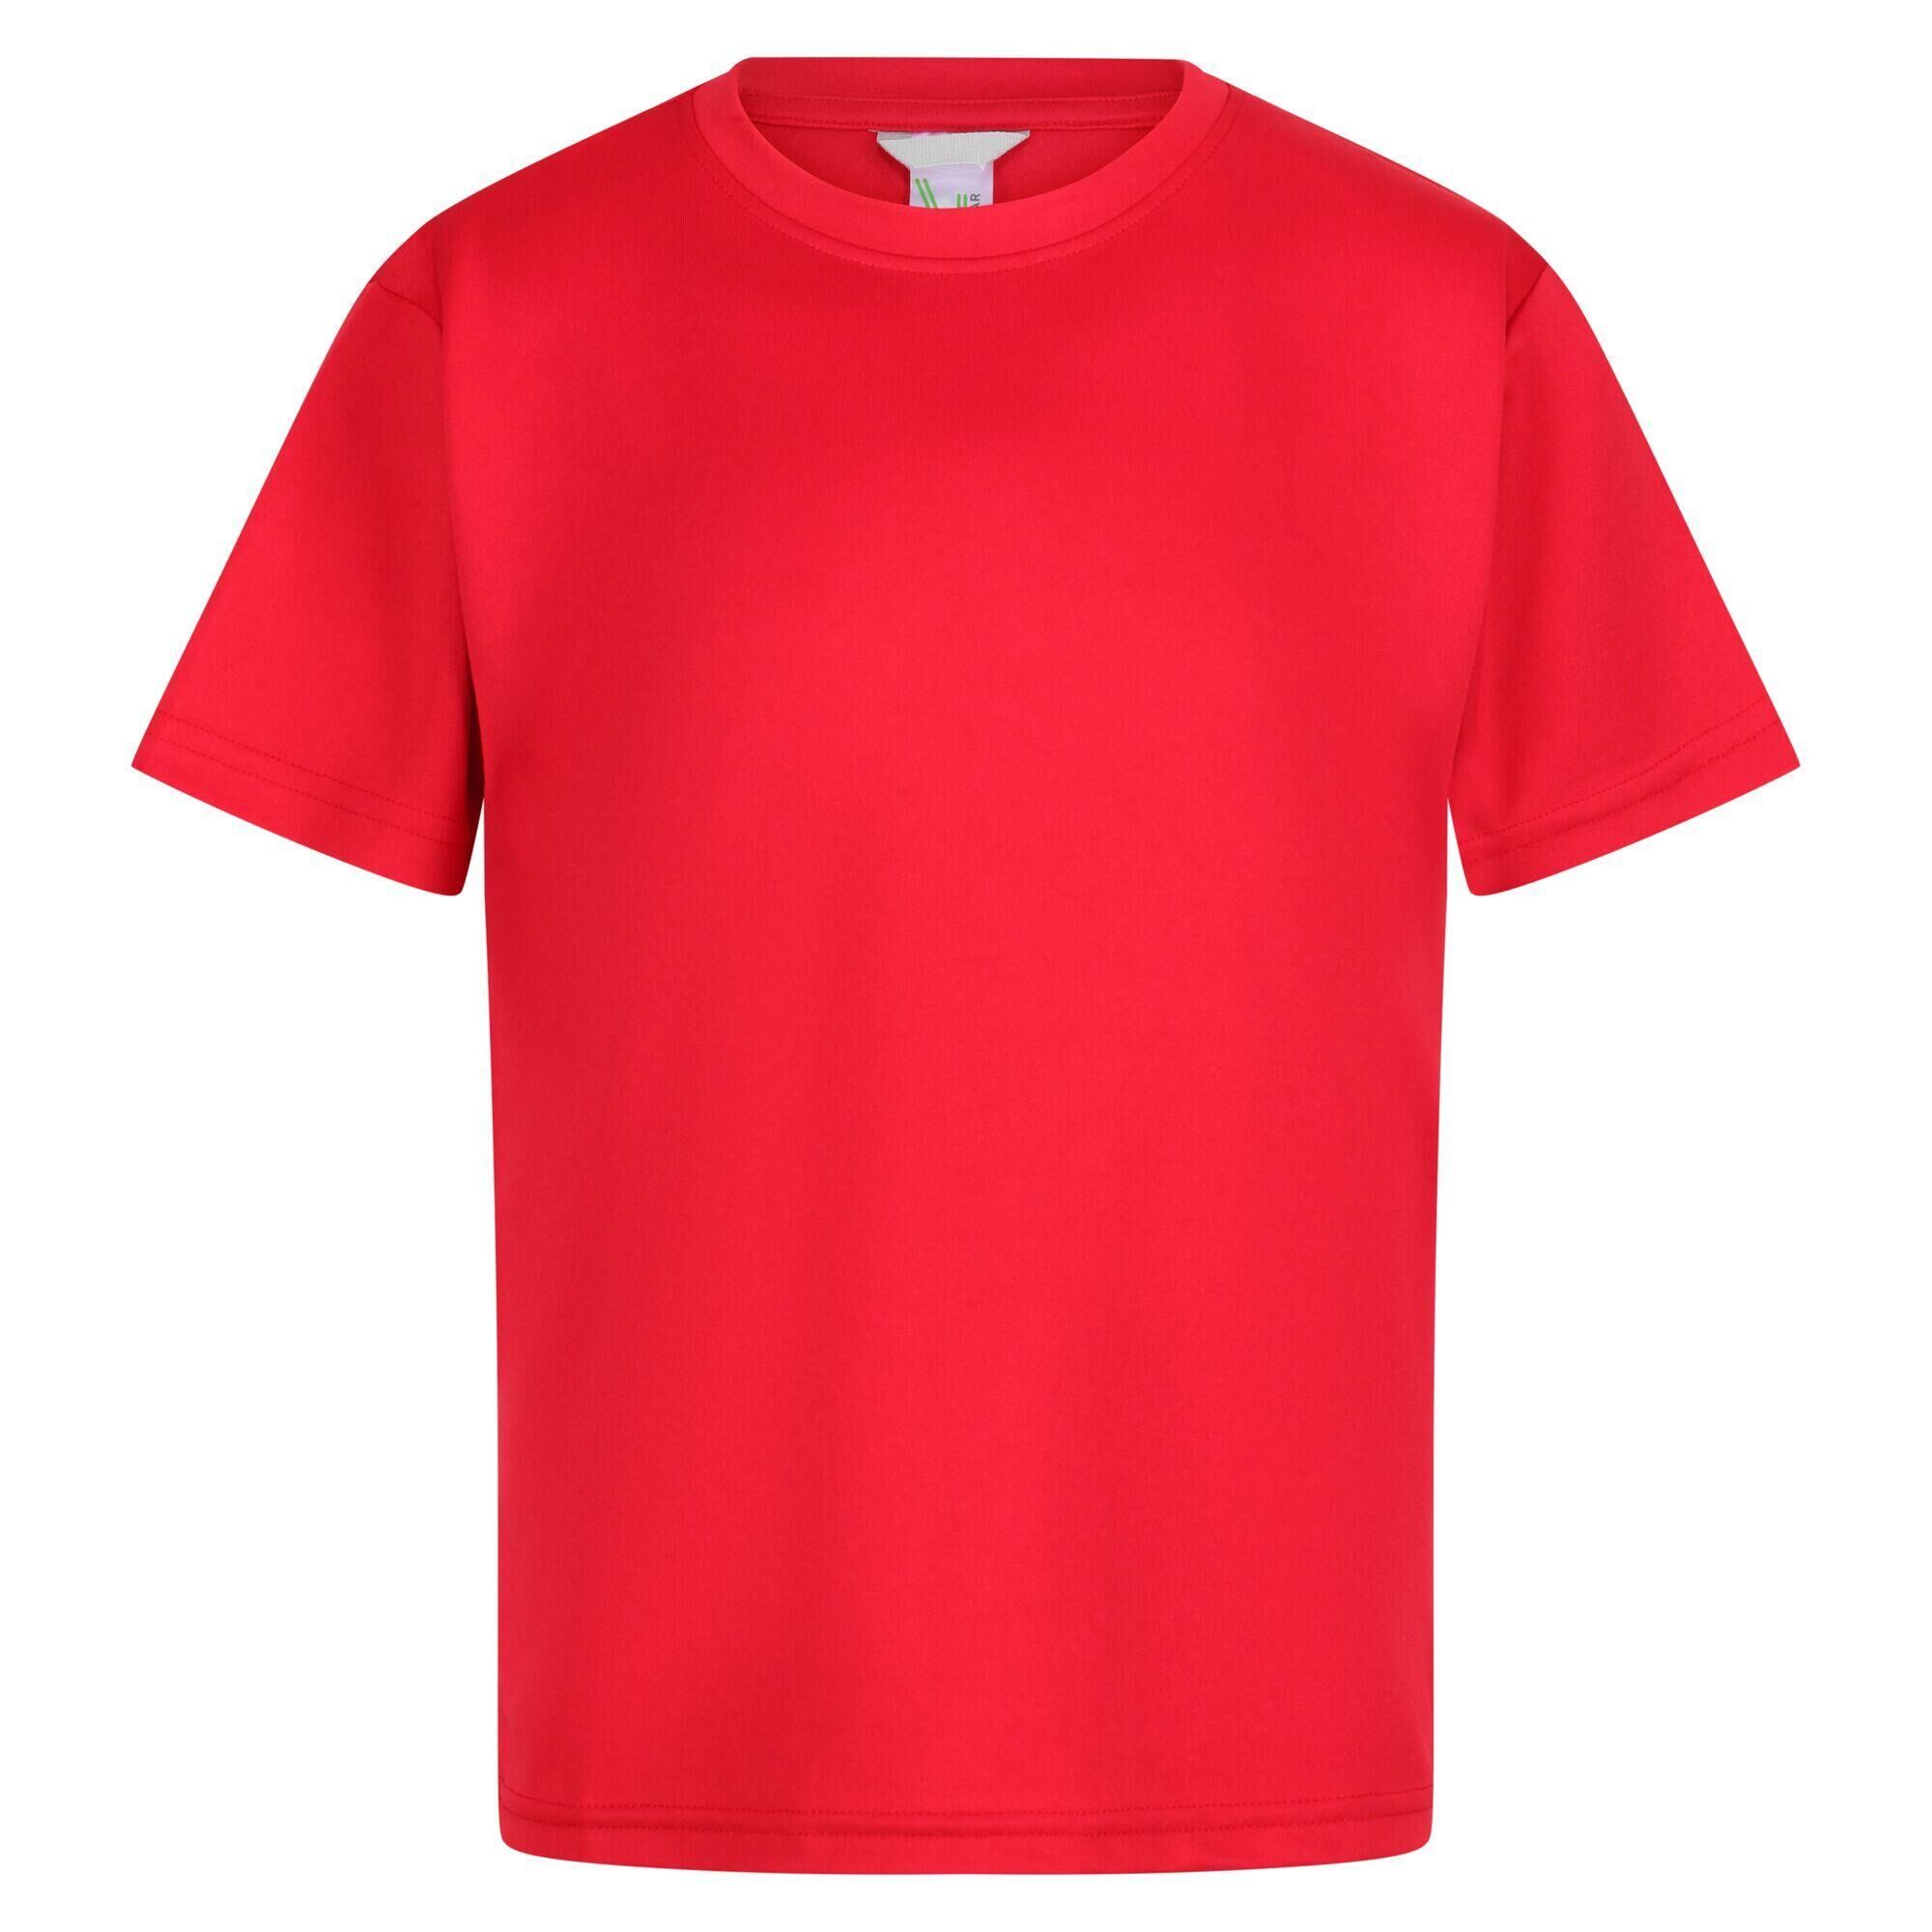 REGATTA Childrens/Kids Torino TShirt (Classic Red)